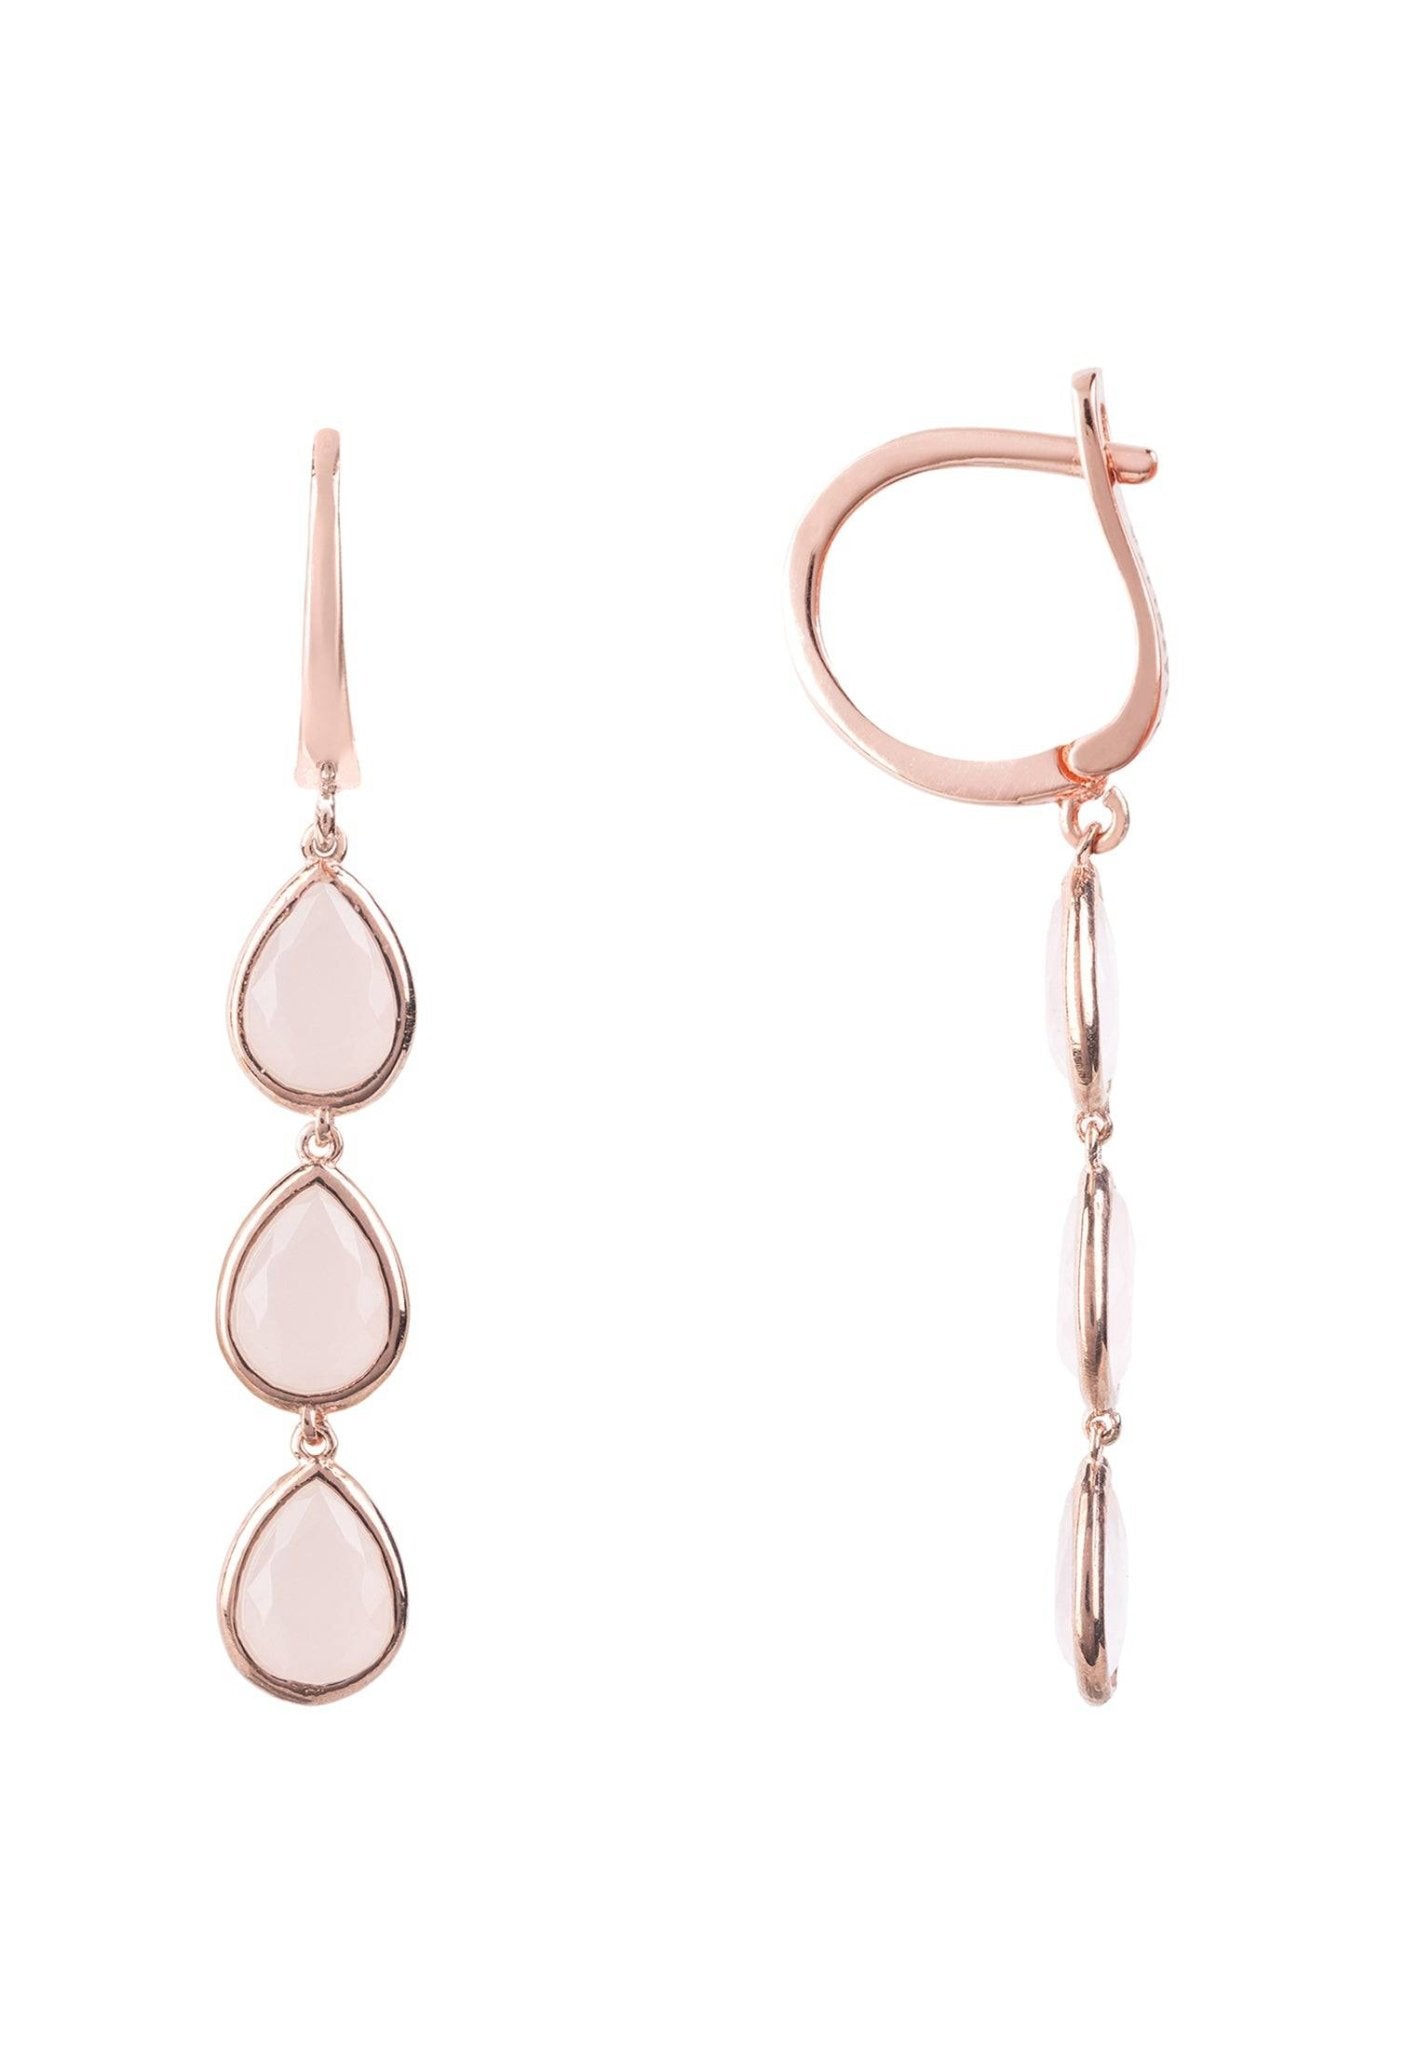 Sorrento Triple Drop Earrings Rosegold Rose Quartz - LATELITA Earrings